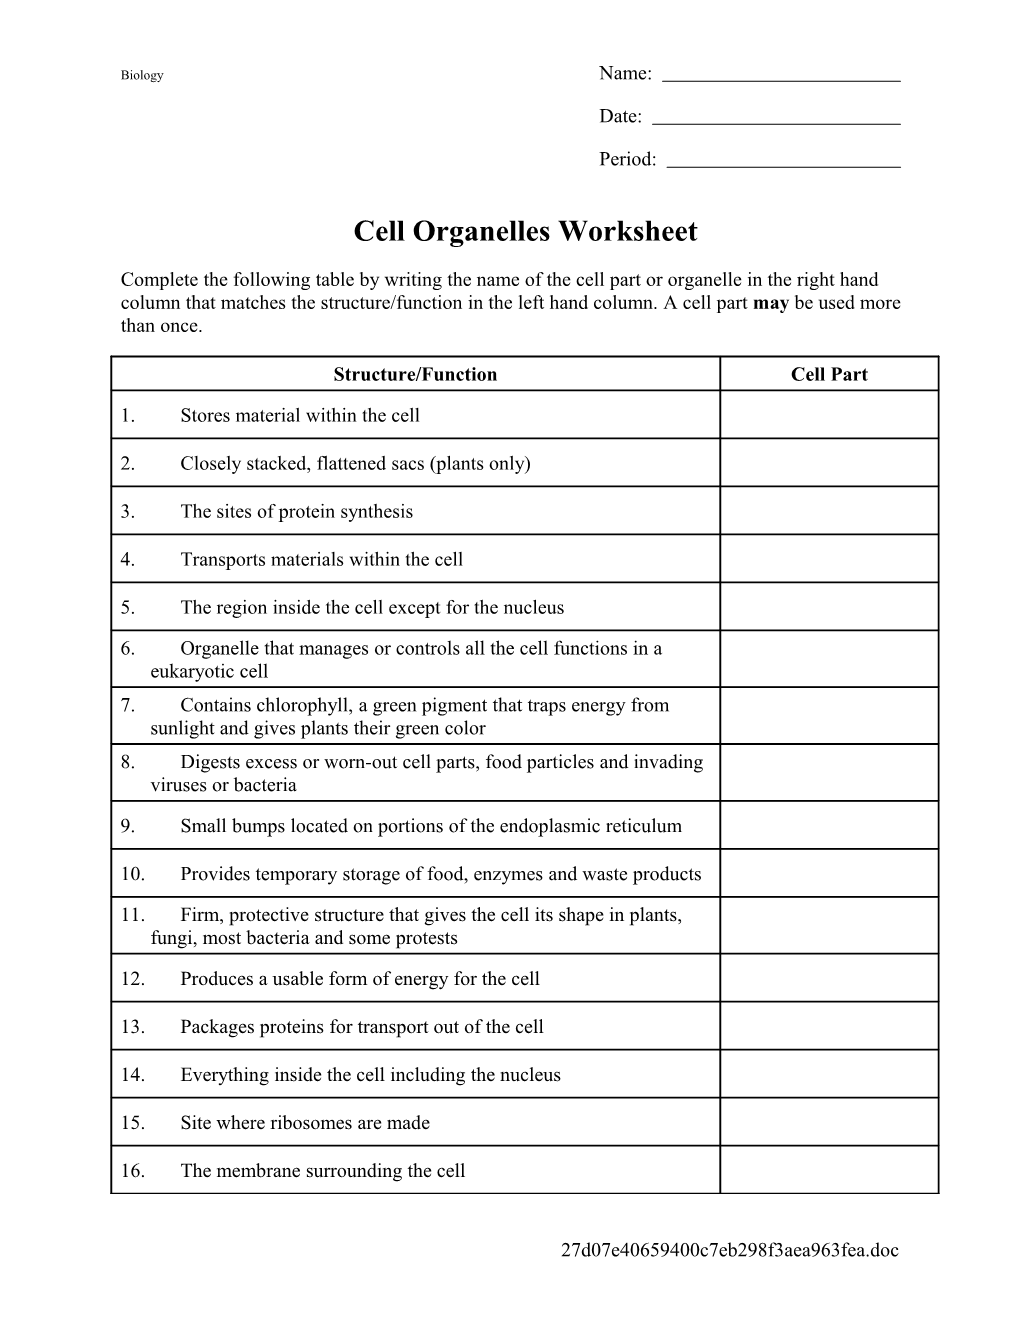 Cell Organelles Worksheet s1